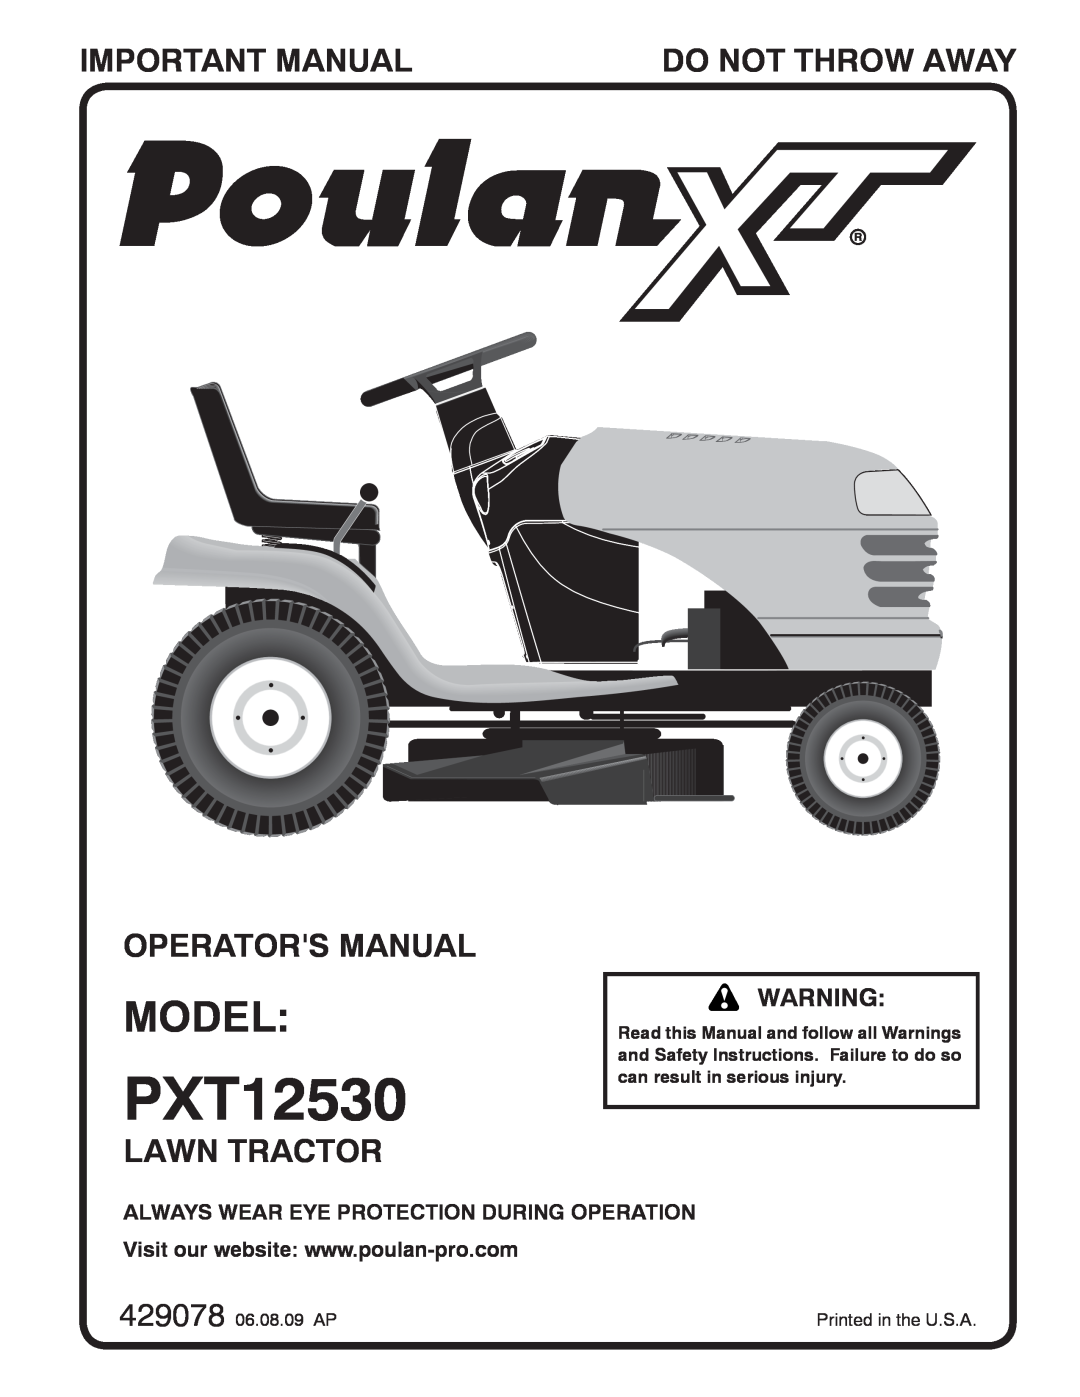 Poulan PXT12530 manual Model, Important Manual, Do Not Throw Away, Operators Manual, Lawn Tractor 